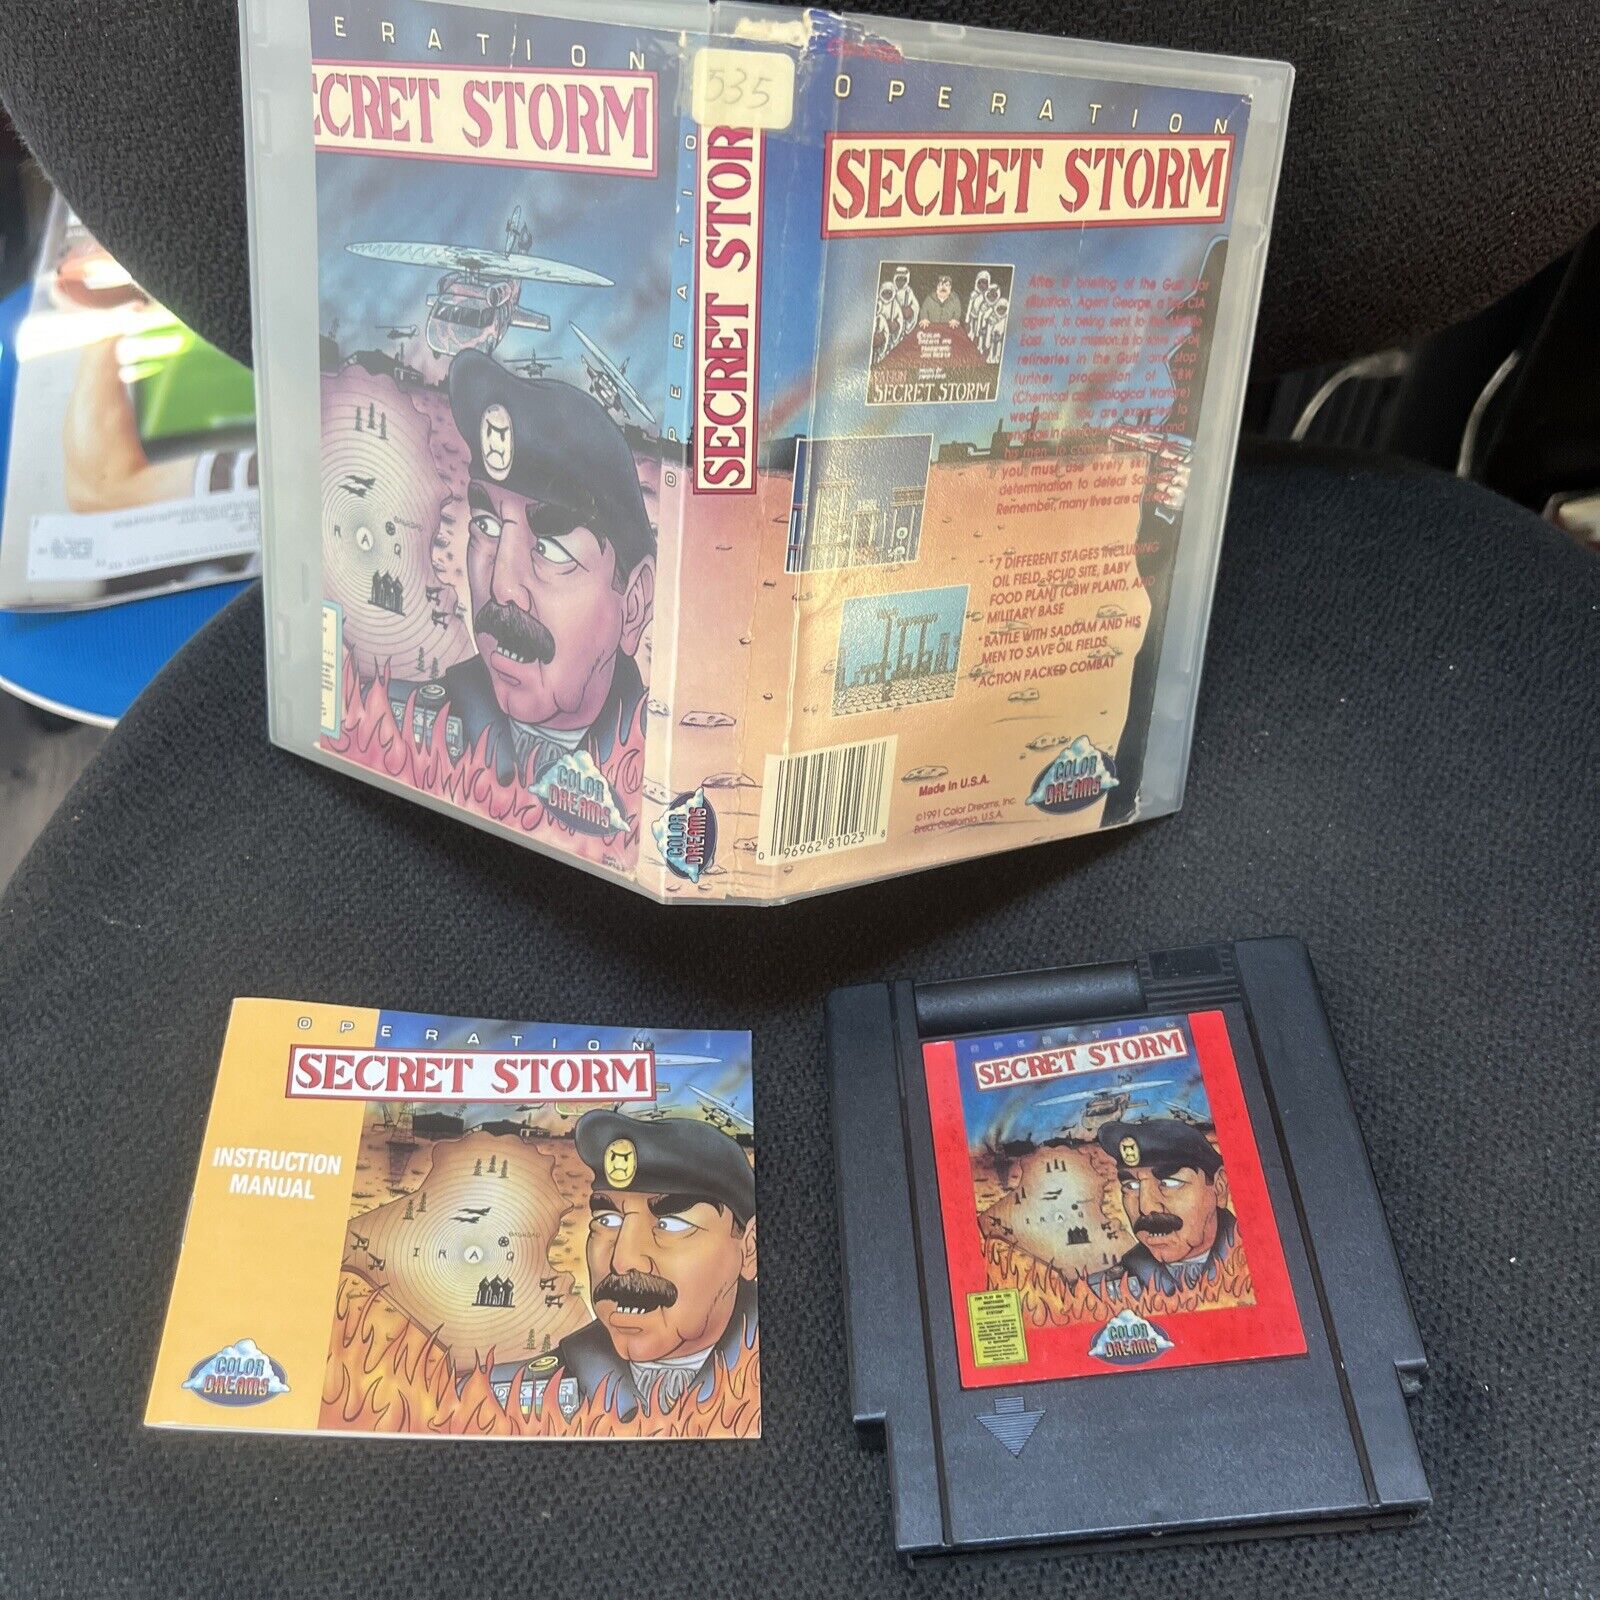 Operation Secret Storm (Nintendo Entertainment System, 1992) Saddam Hussein